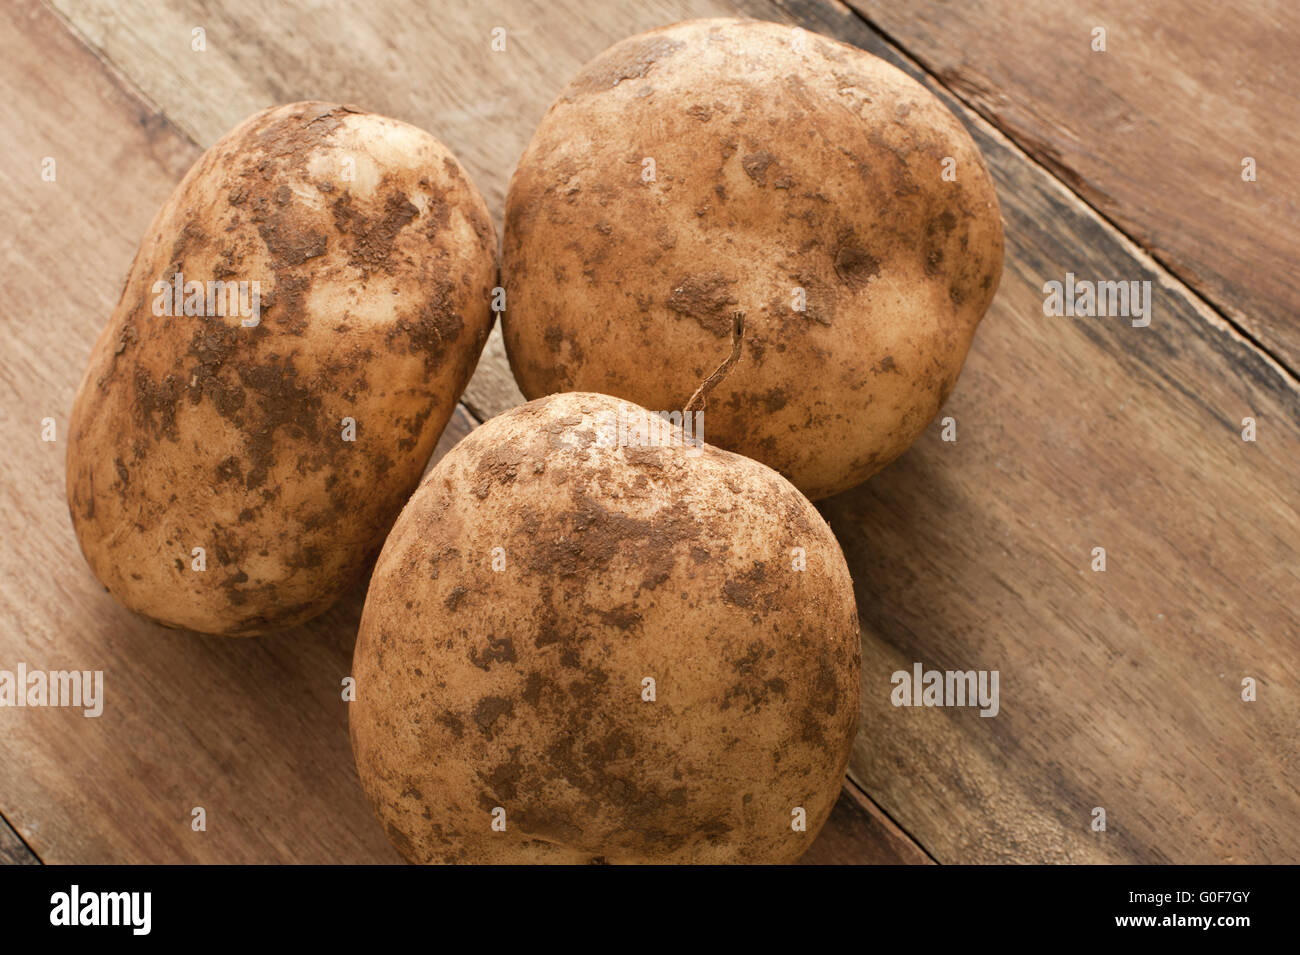 Unwashed fresh farm potatoes Stock Photo